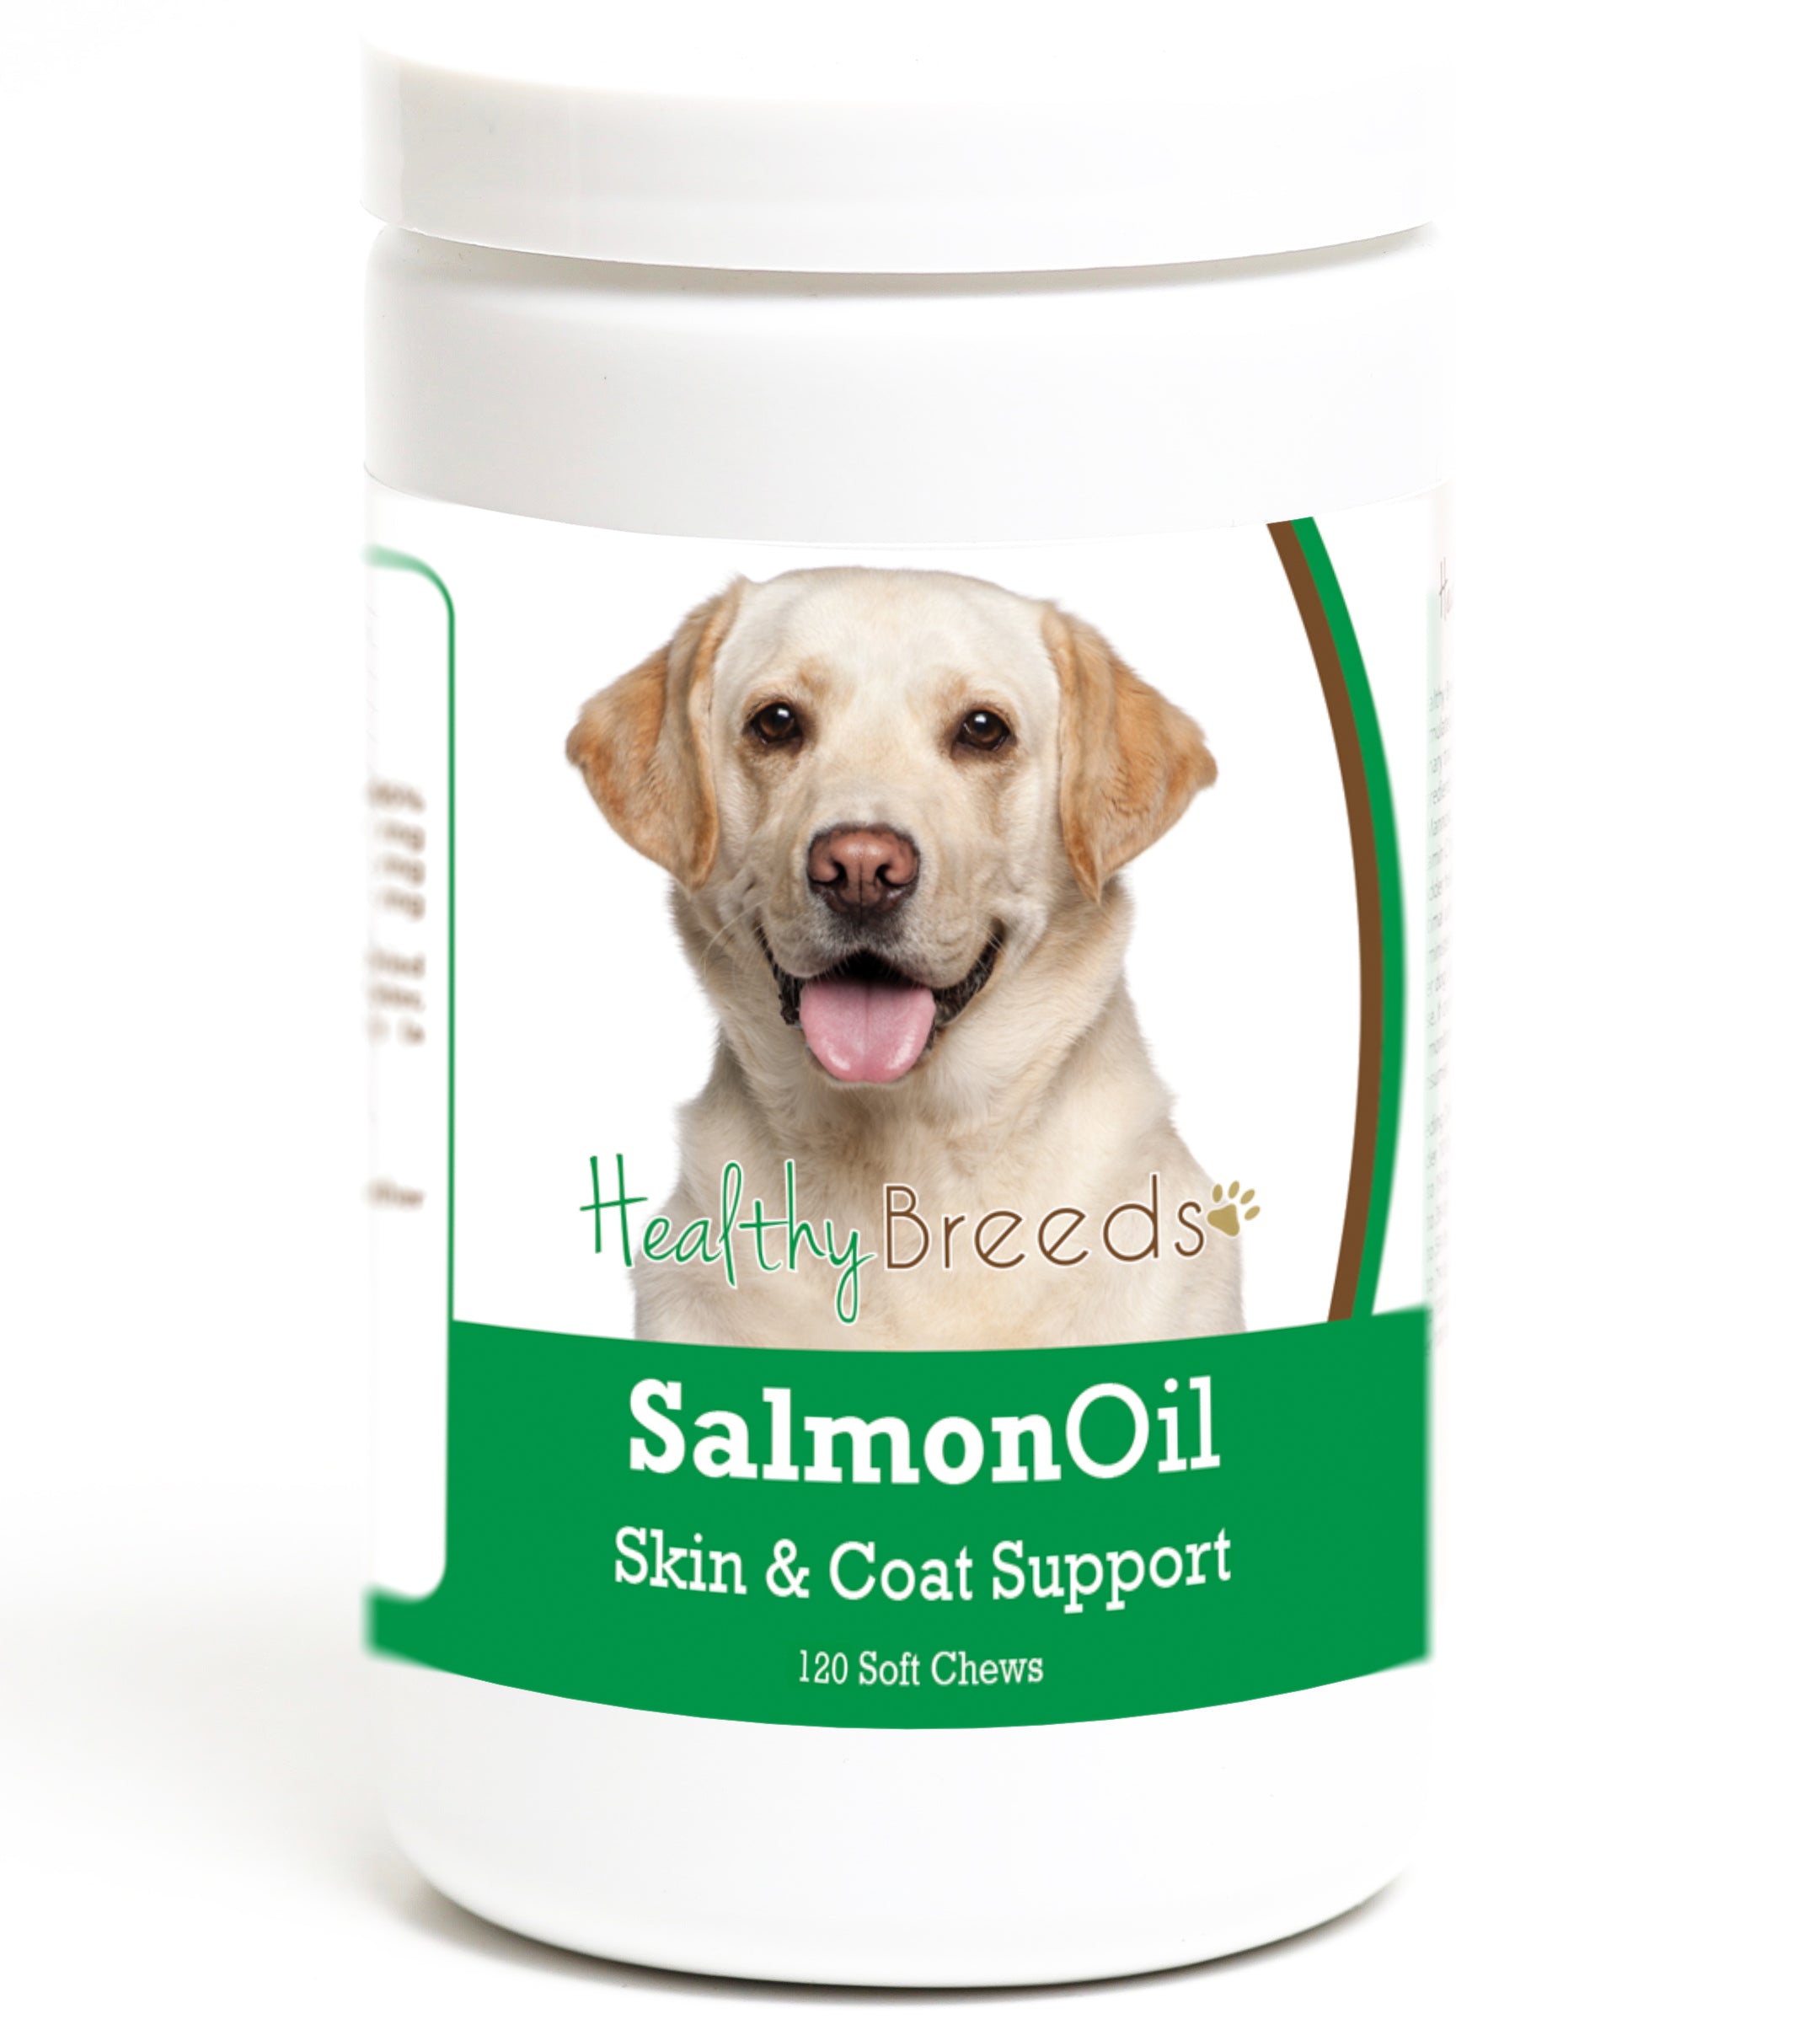 Labrador Retriever Salmon Oil Soft Chews 120 Count